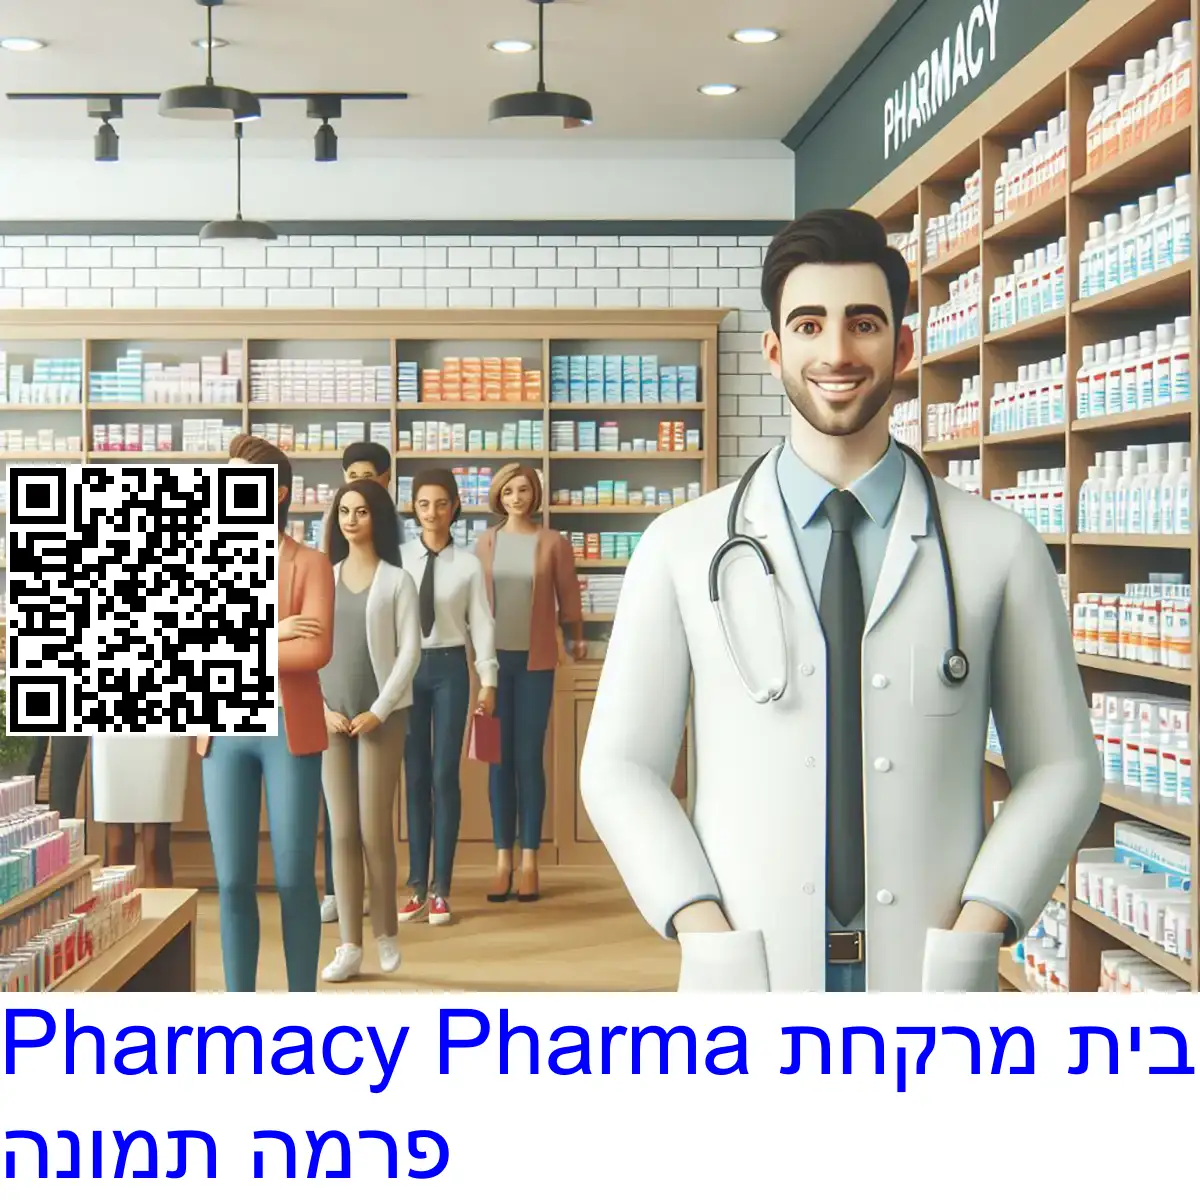 Pharmacy Pharma בית מרקחת פרמה